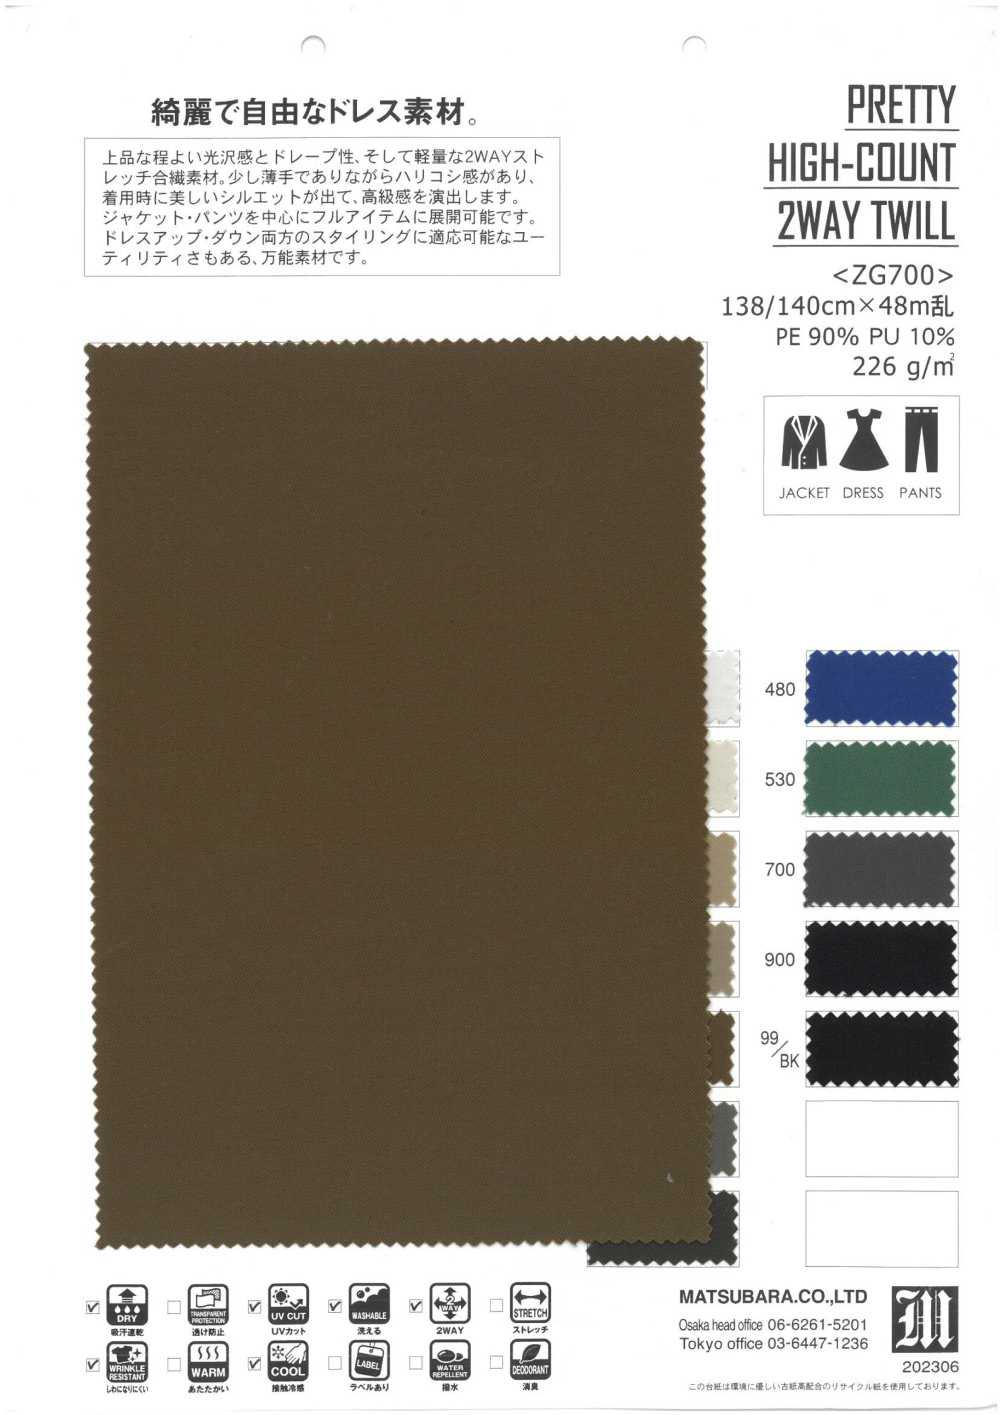 ZG700 PRETTY HIGH-COUNT 2WAY TWILL[Textile / Fabric] Matsubara